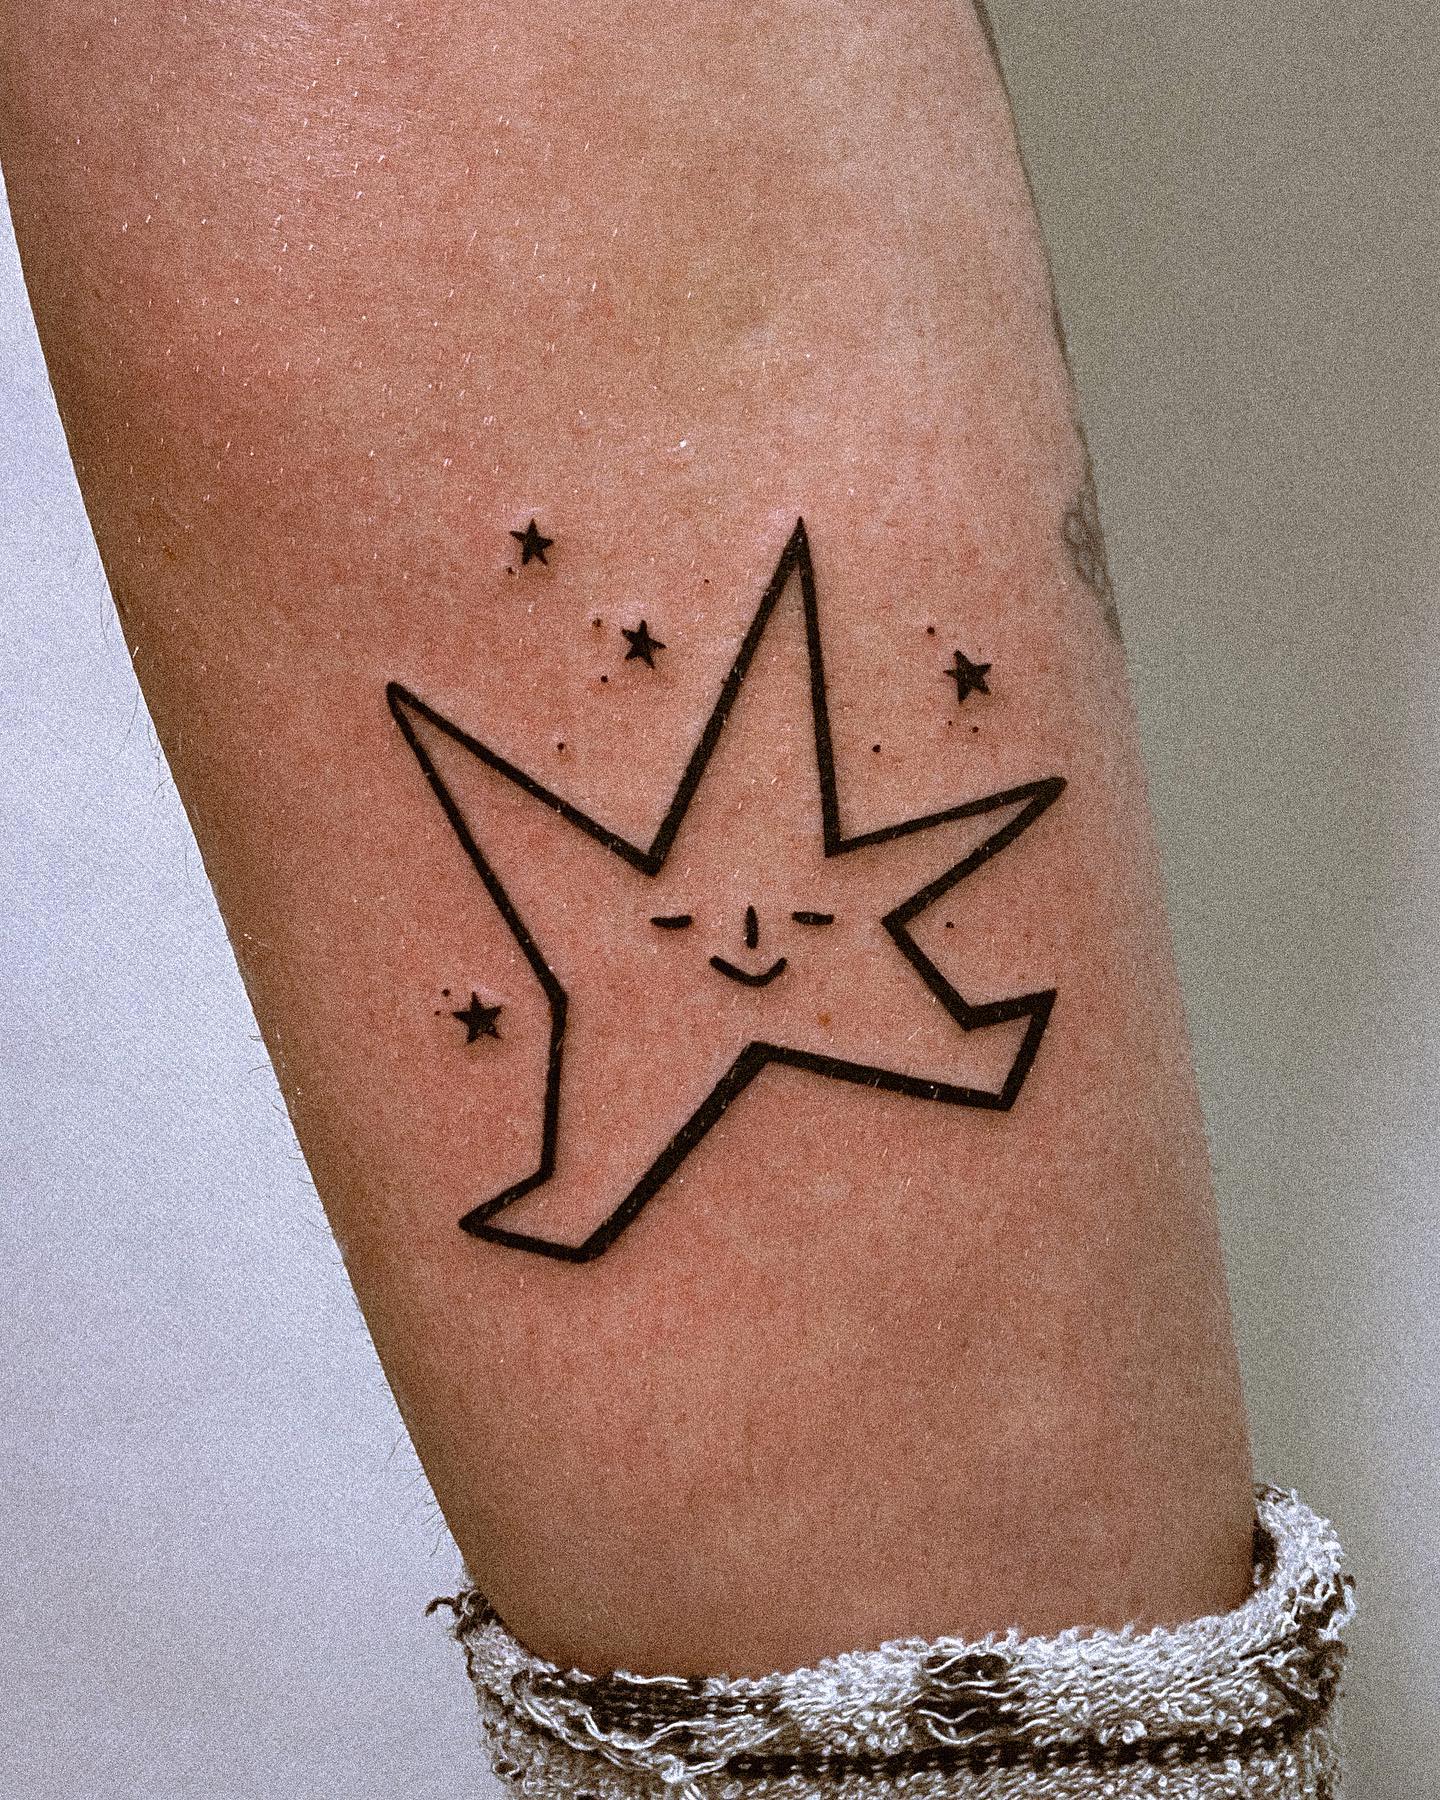 Tatuaje de Estrella Bailarina en el Brazo